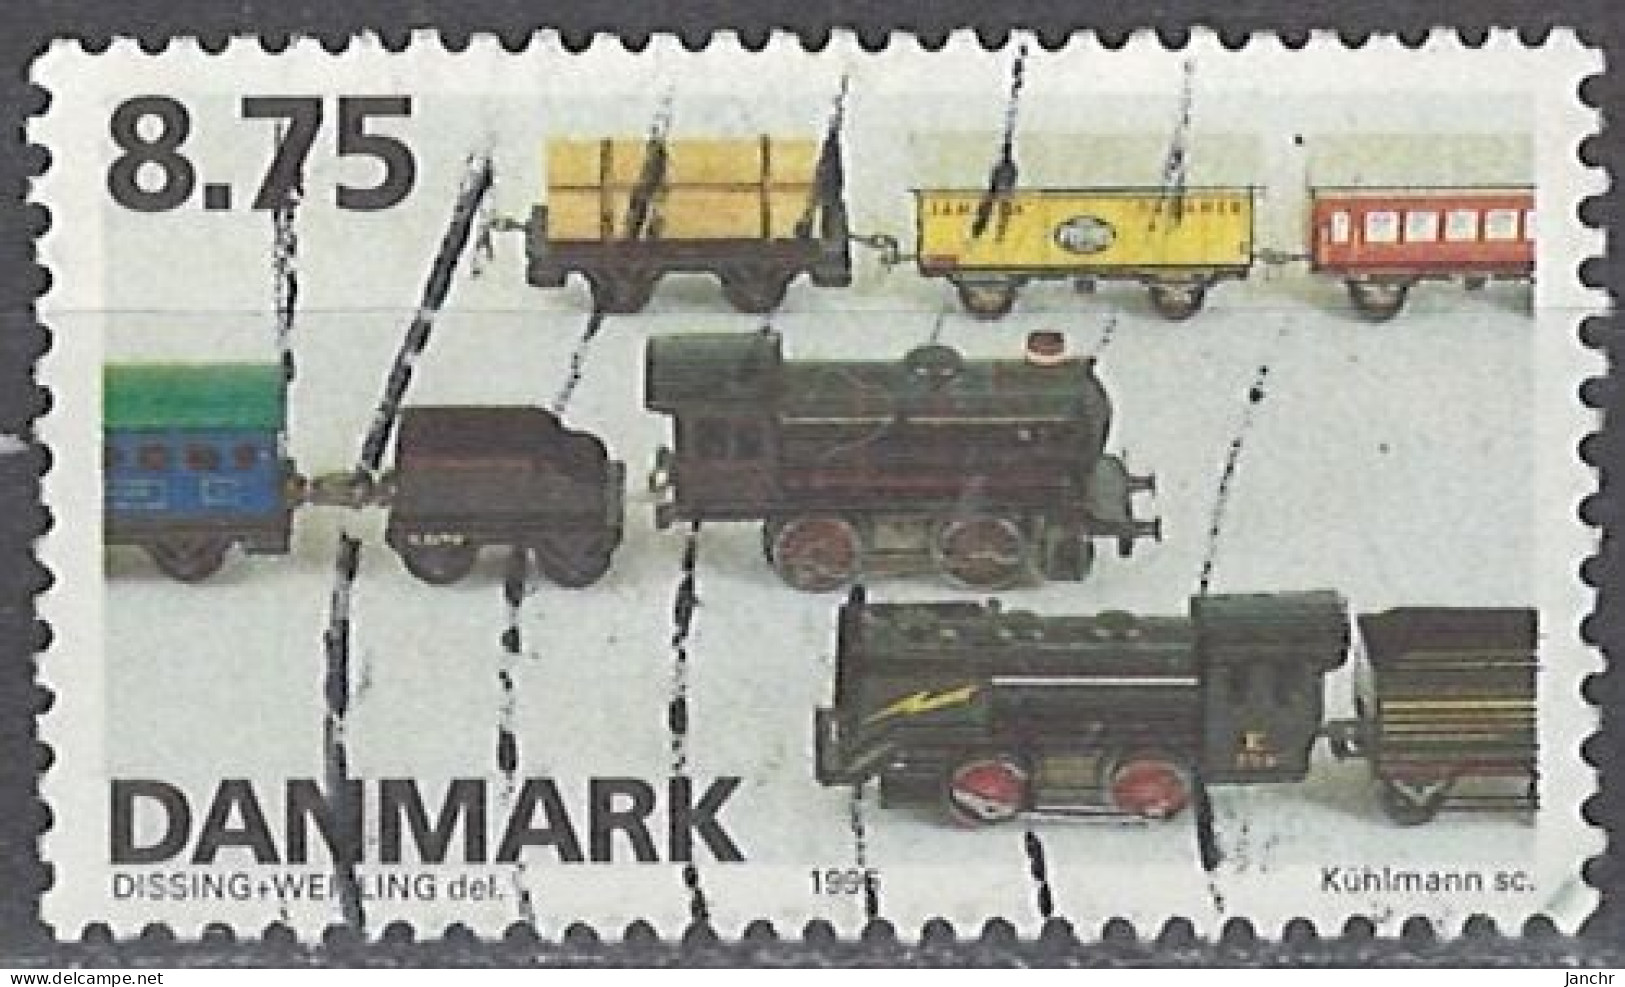 Denmark 1995. Mi.Nr. 1114, Used O - Used Stamps